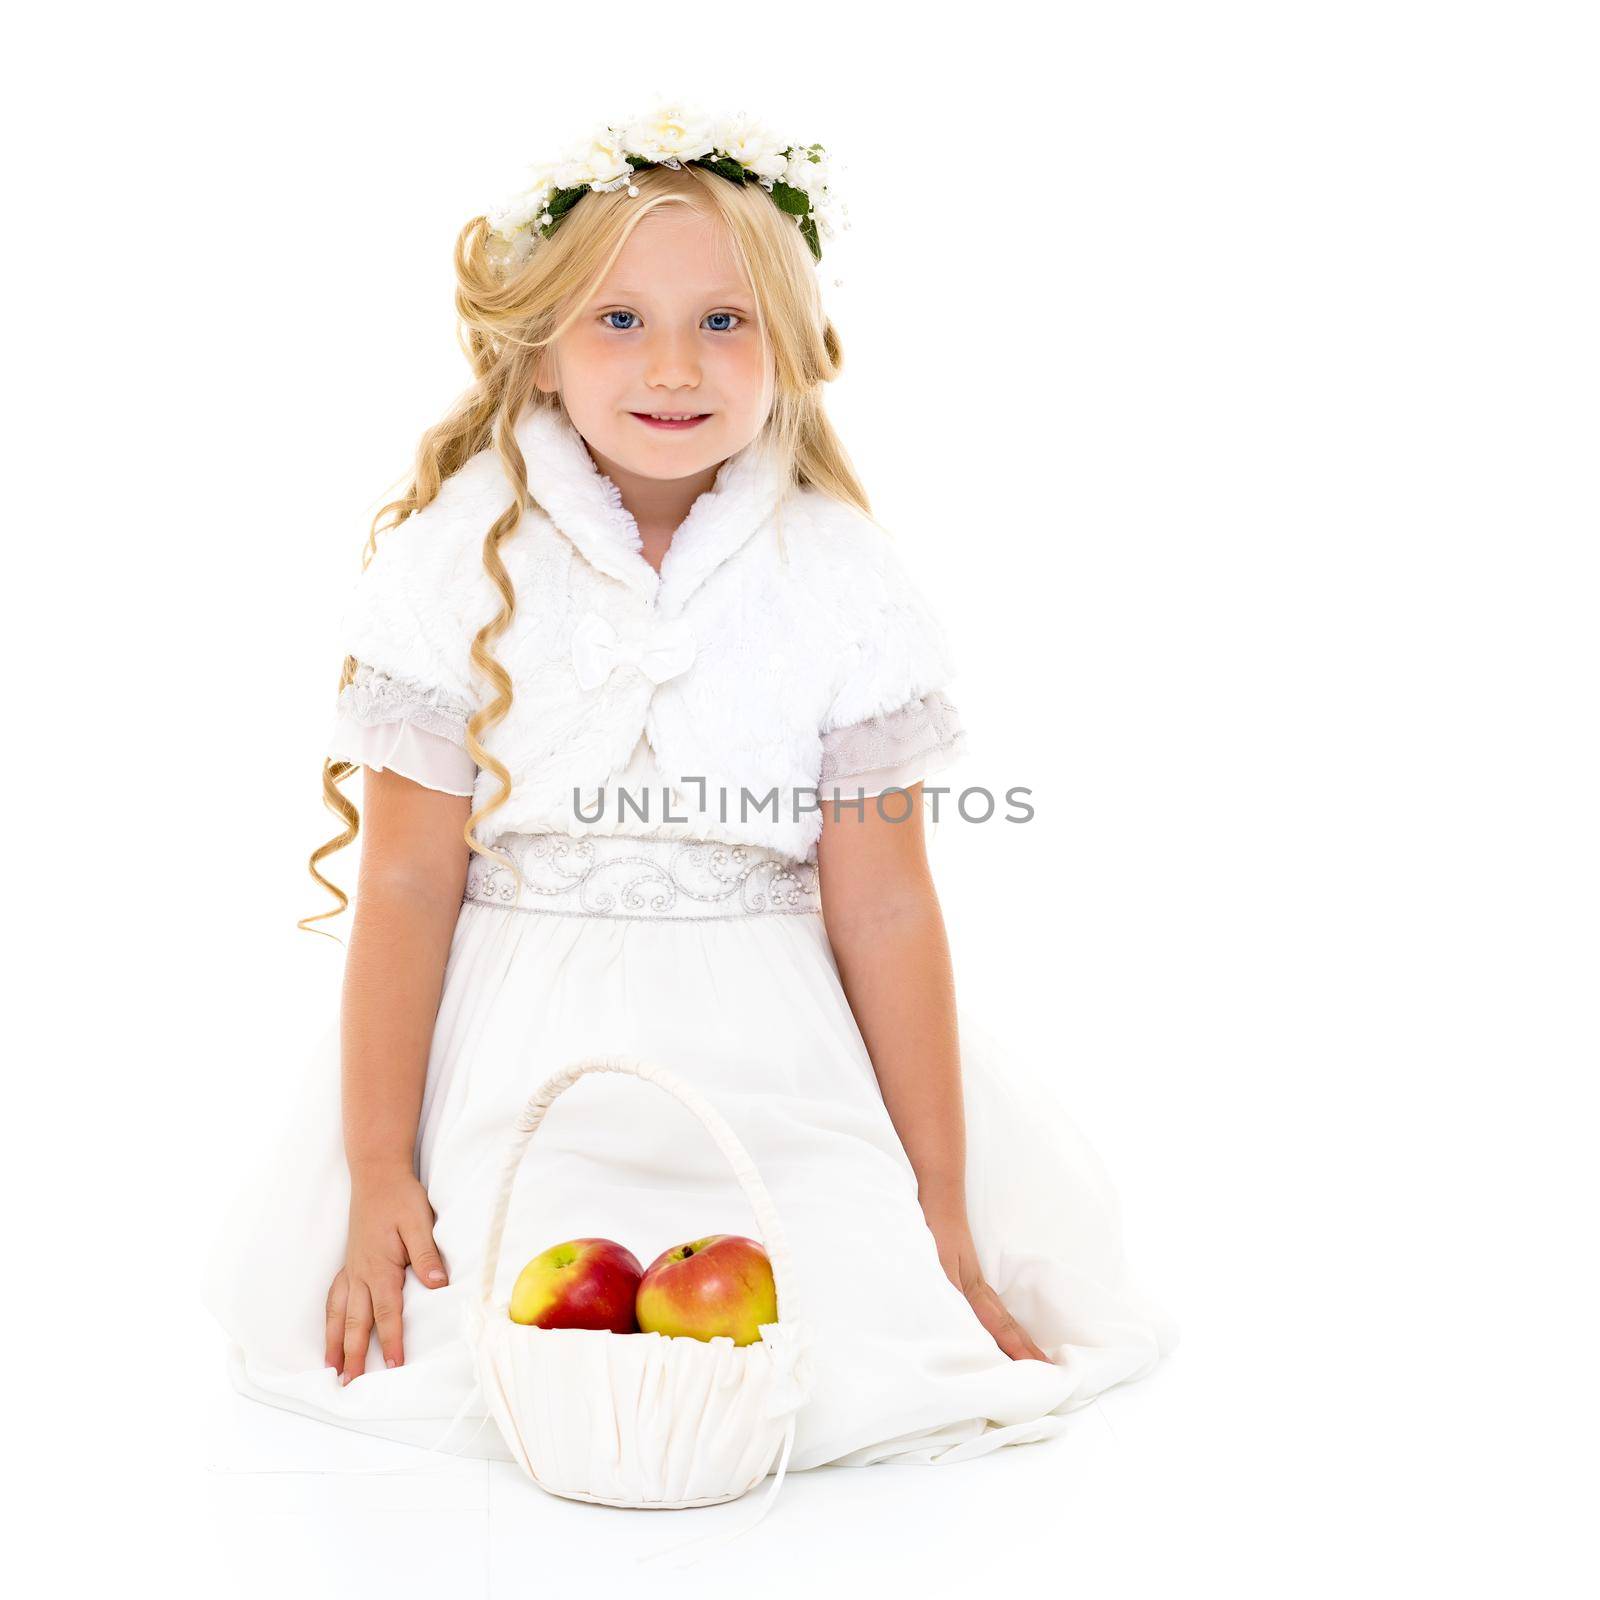 Little girl with a basket of apples. by kolesnikov_studio